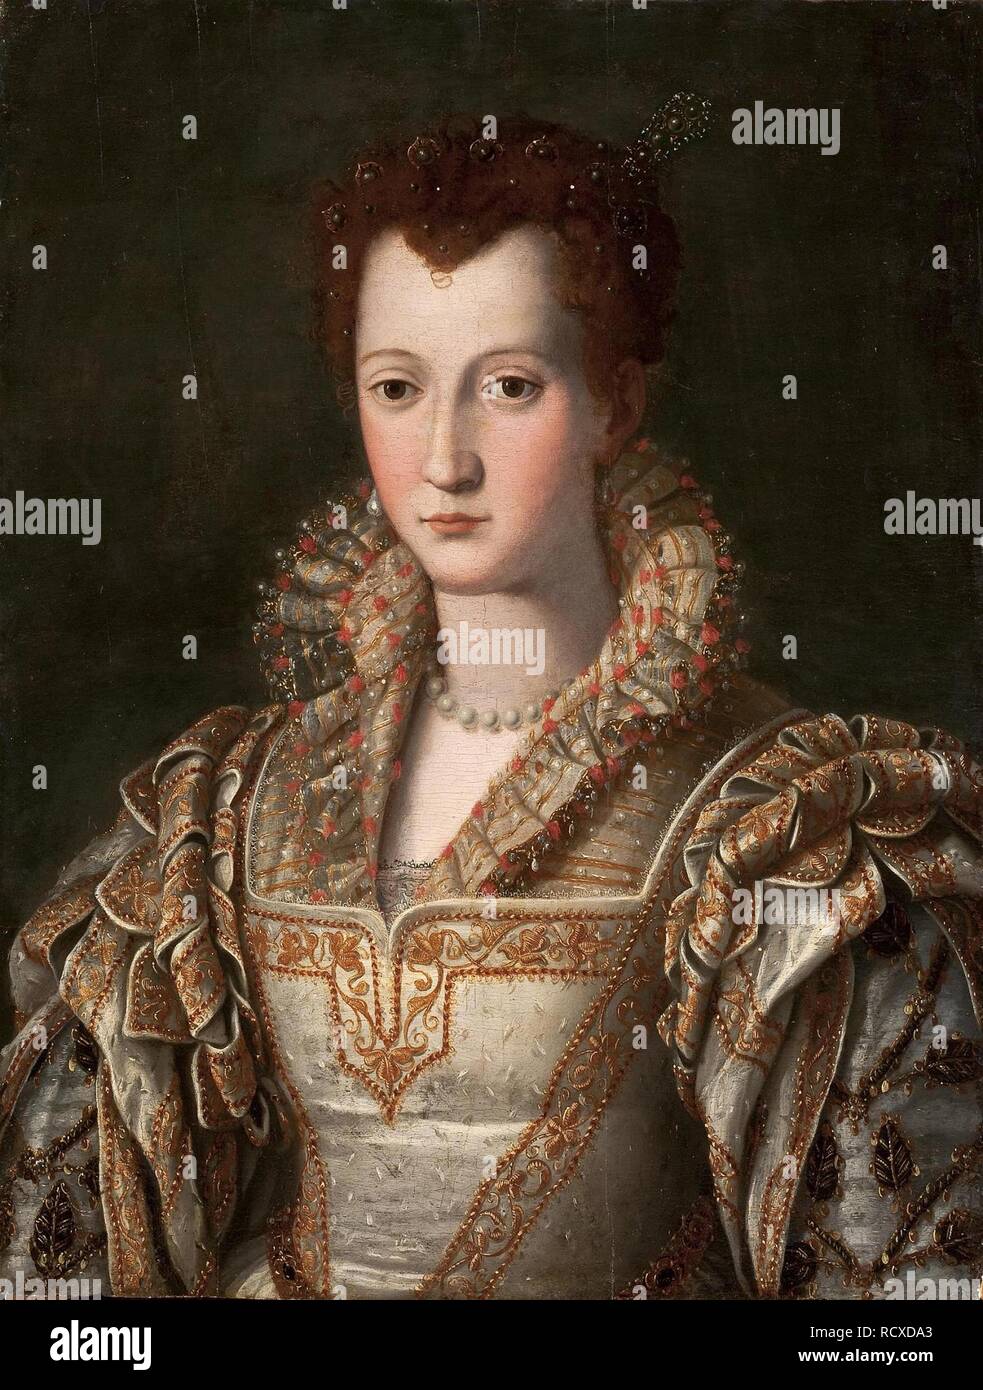 Portrait von Eleonore von Toledo (1522-1562), Ehefrau von Großherzog Cosimo I. de' Medici. Museum: Staatliche Eremitage, St. Petersburg. Autor: Alessandro Allori. Stockfoto